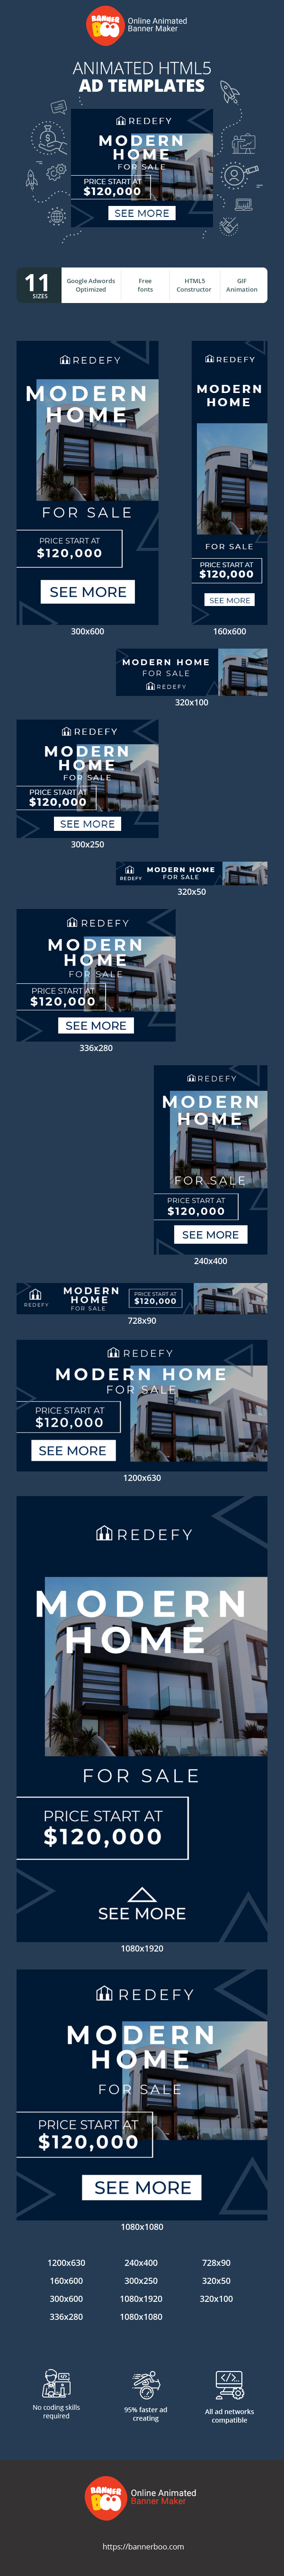 Шаблон рекламного банера — Modern Home — For Sale Price Start At $120000